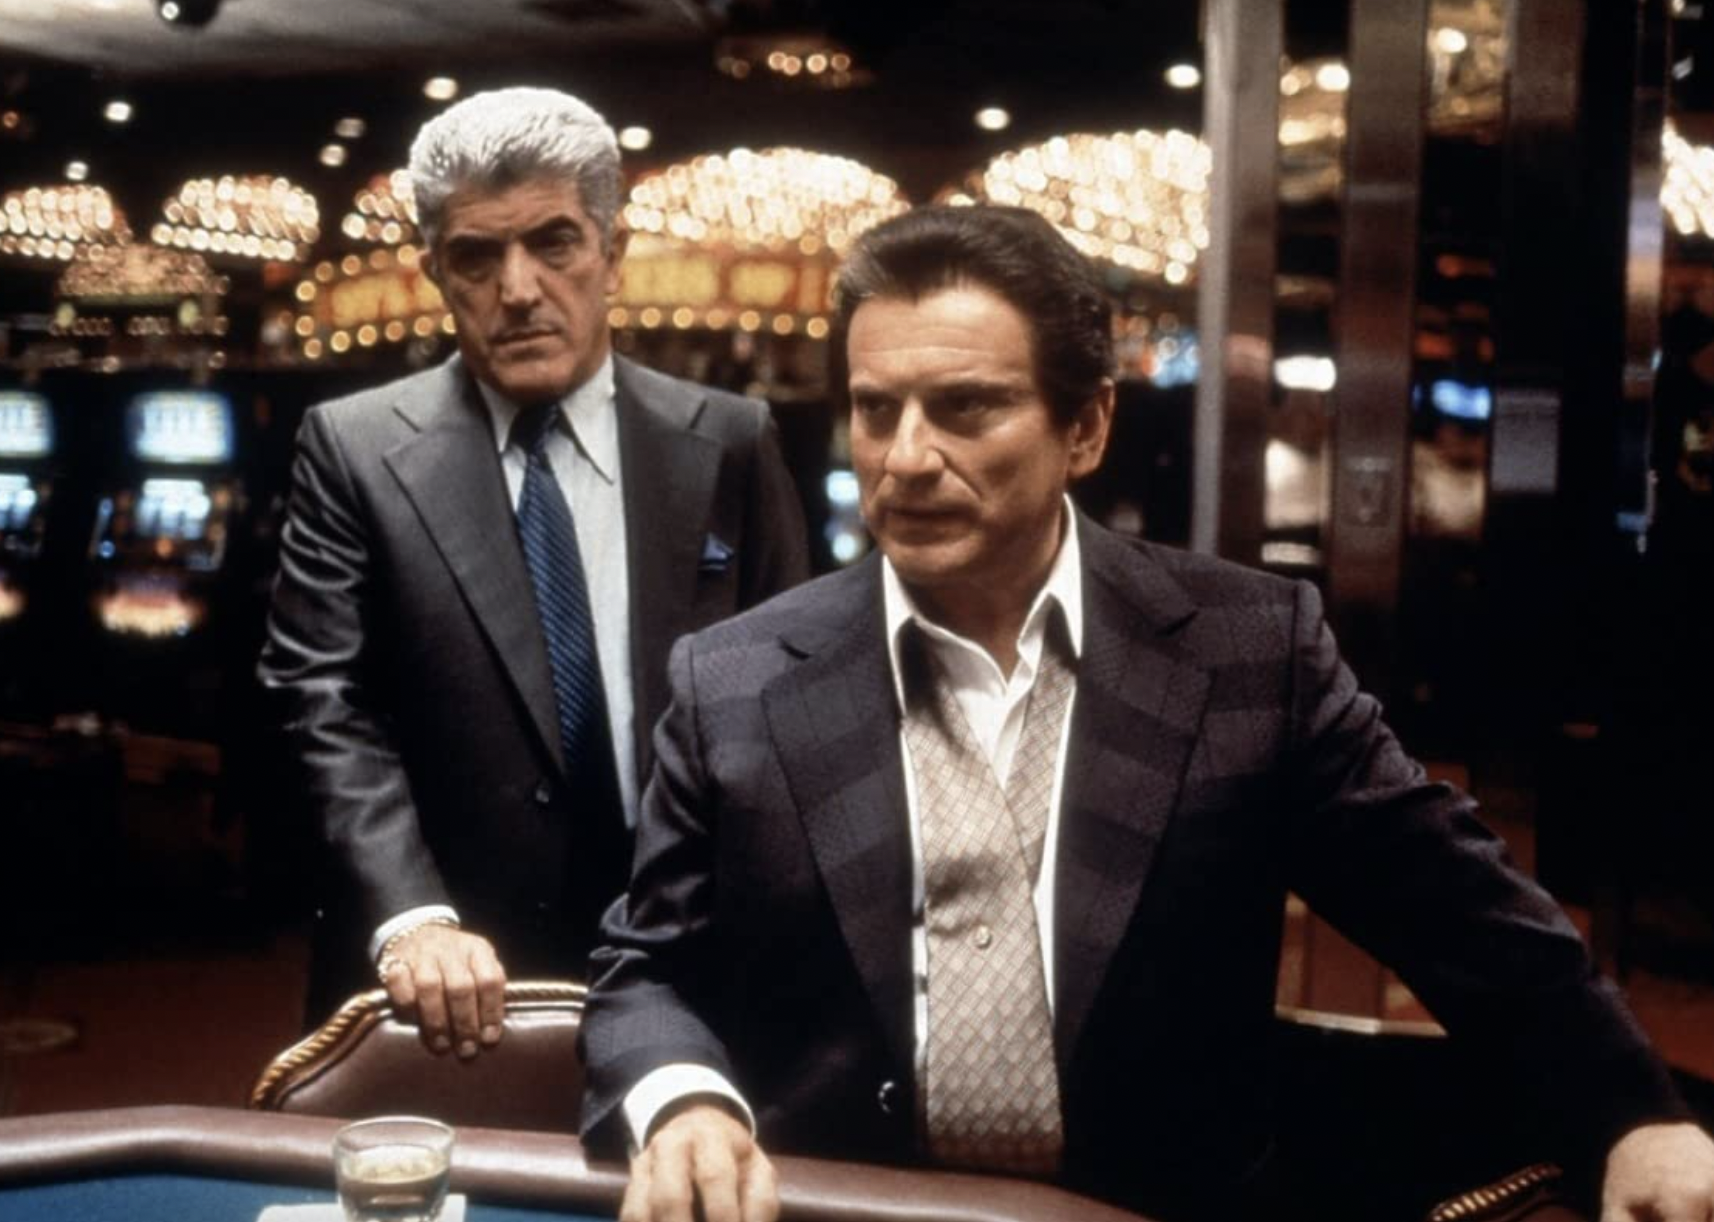 Joe Pesci and Frank Vincent in "Casino"